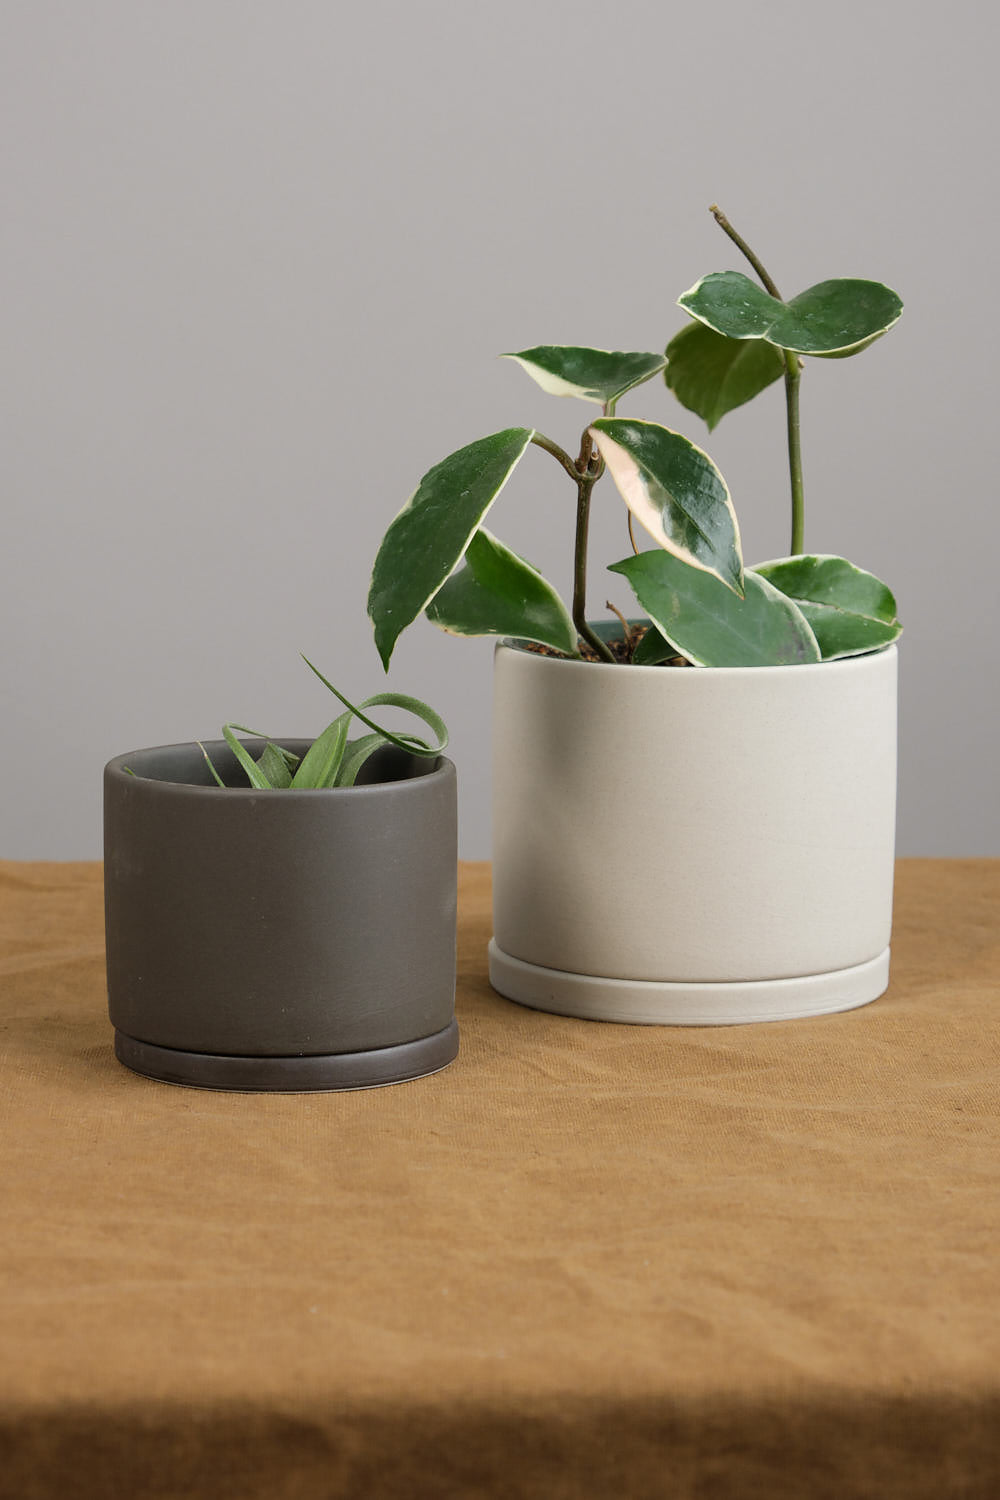 4" Plant Pot n earth grey with 3" plant pot in dark grey